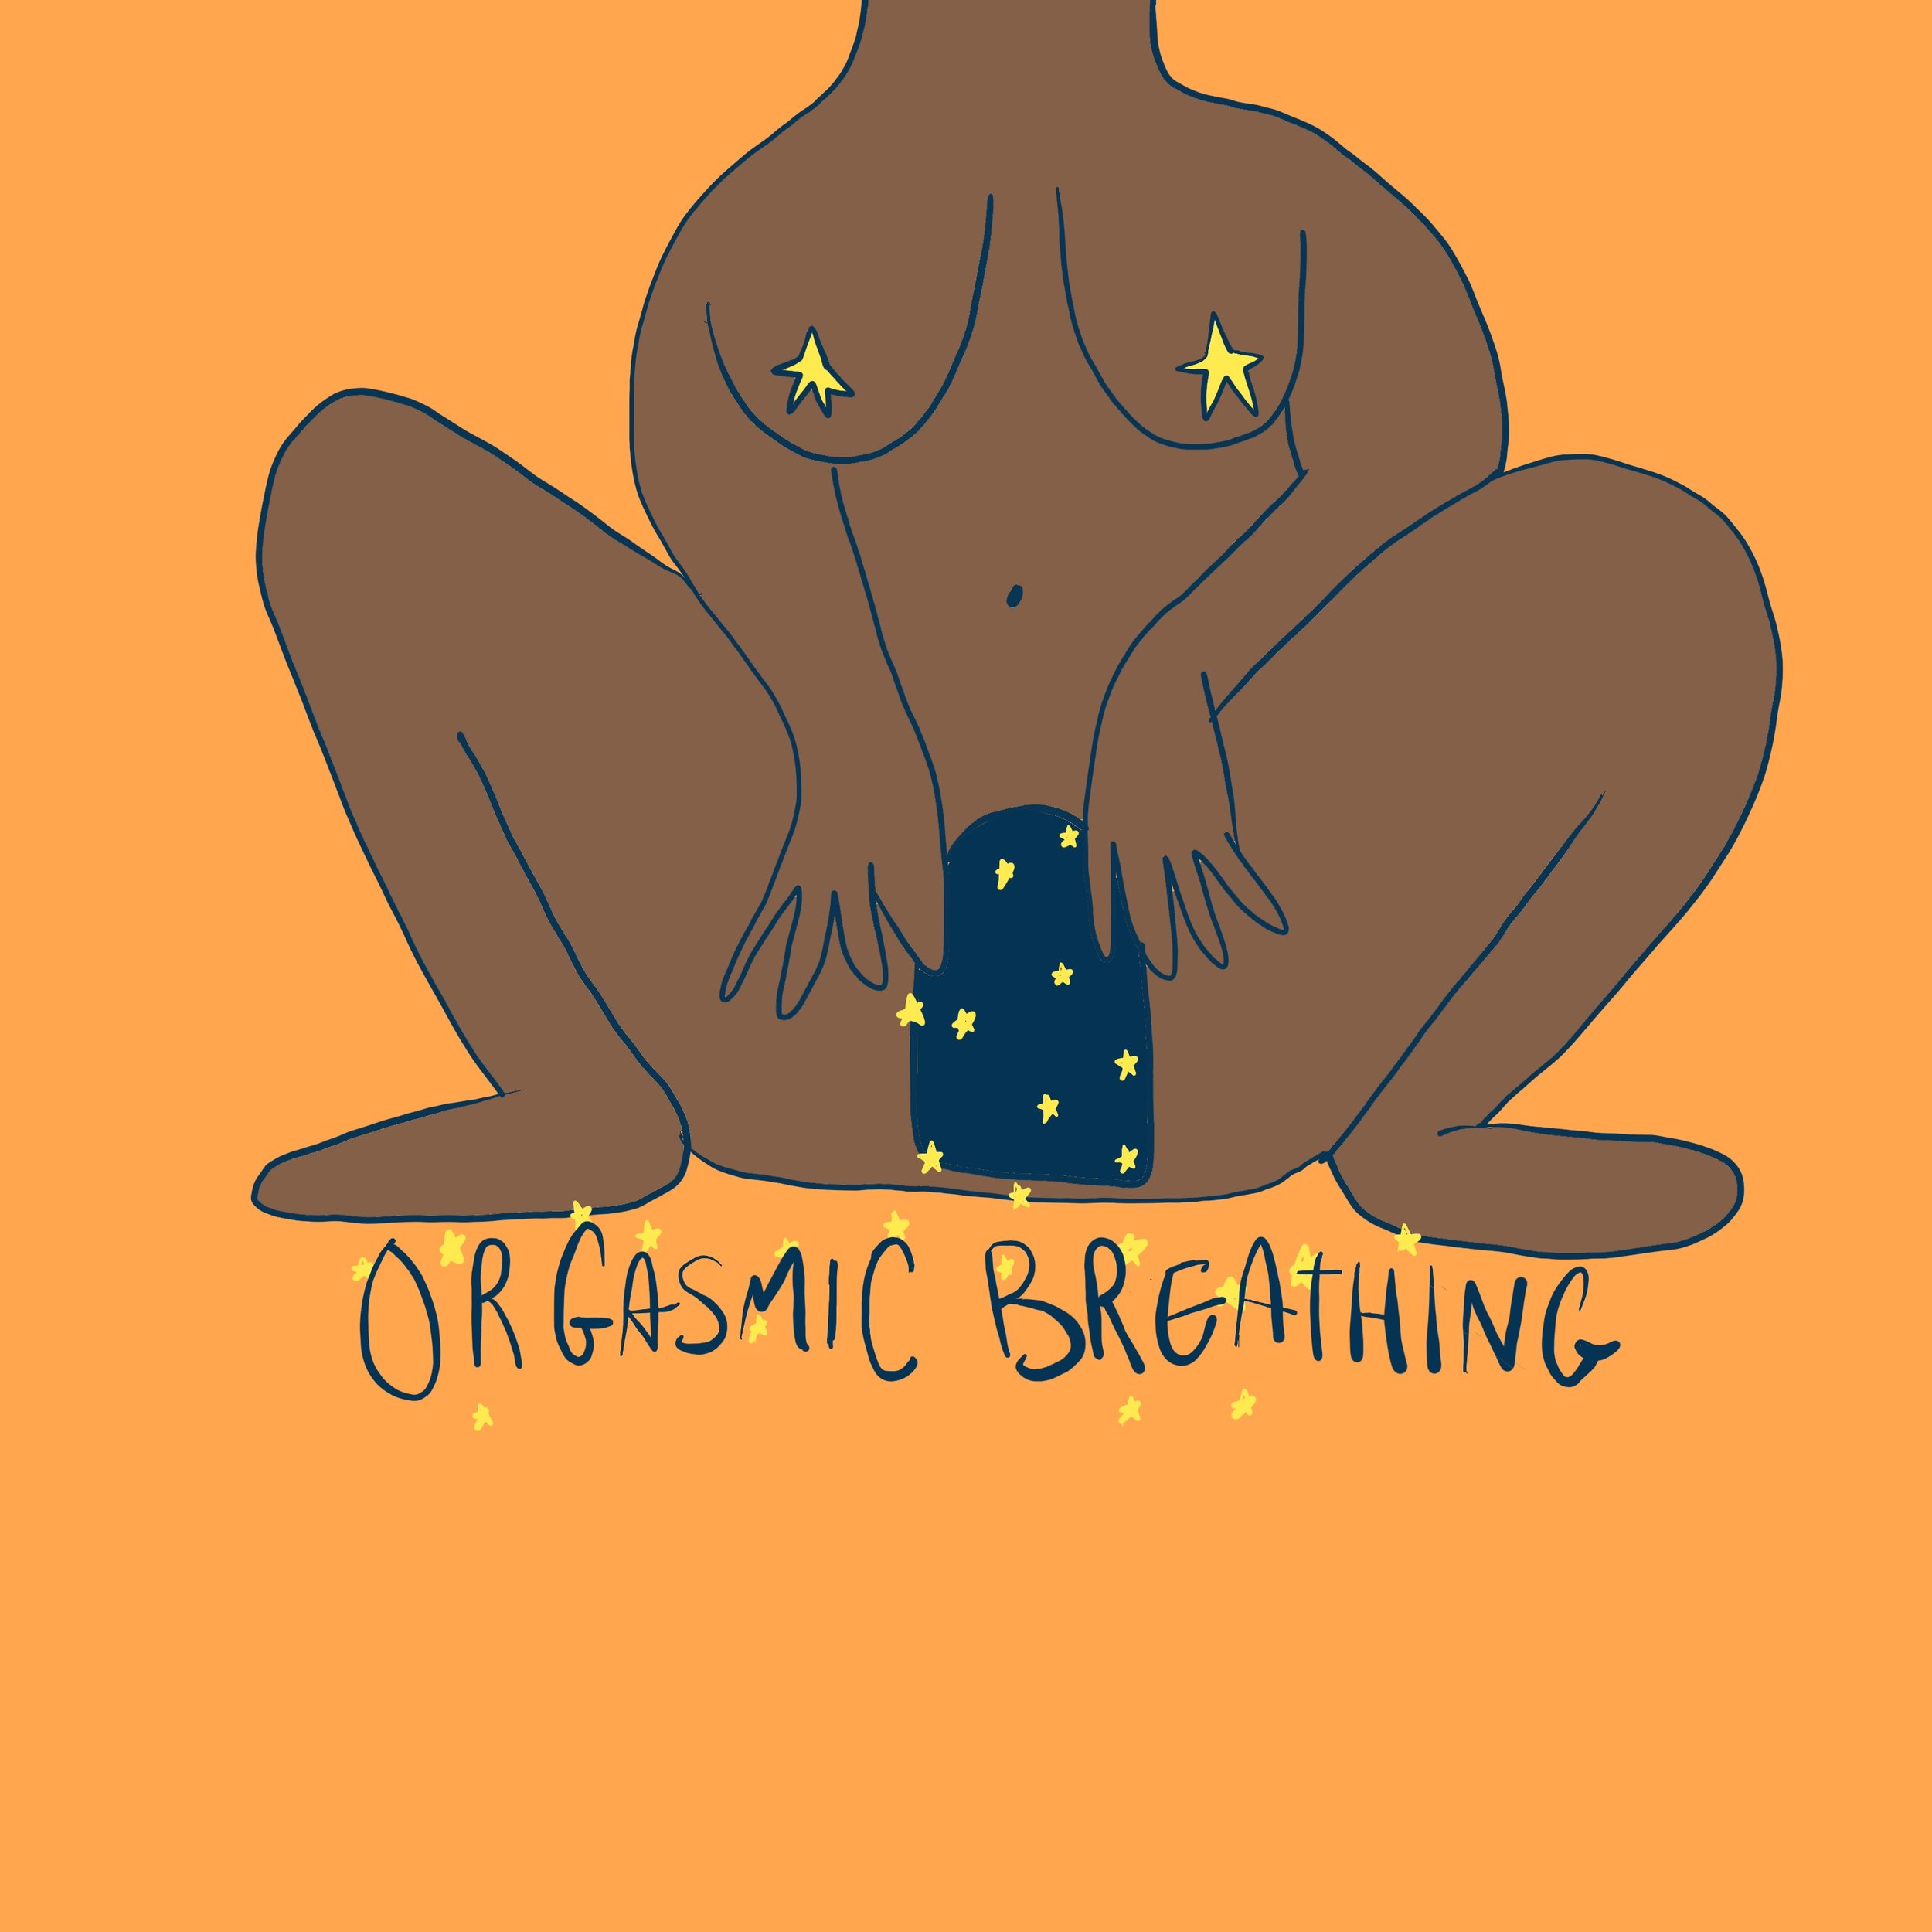 Orgasmic Breathing — The Sex Ed photo